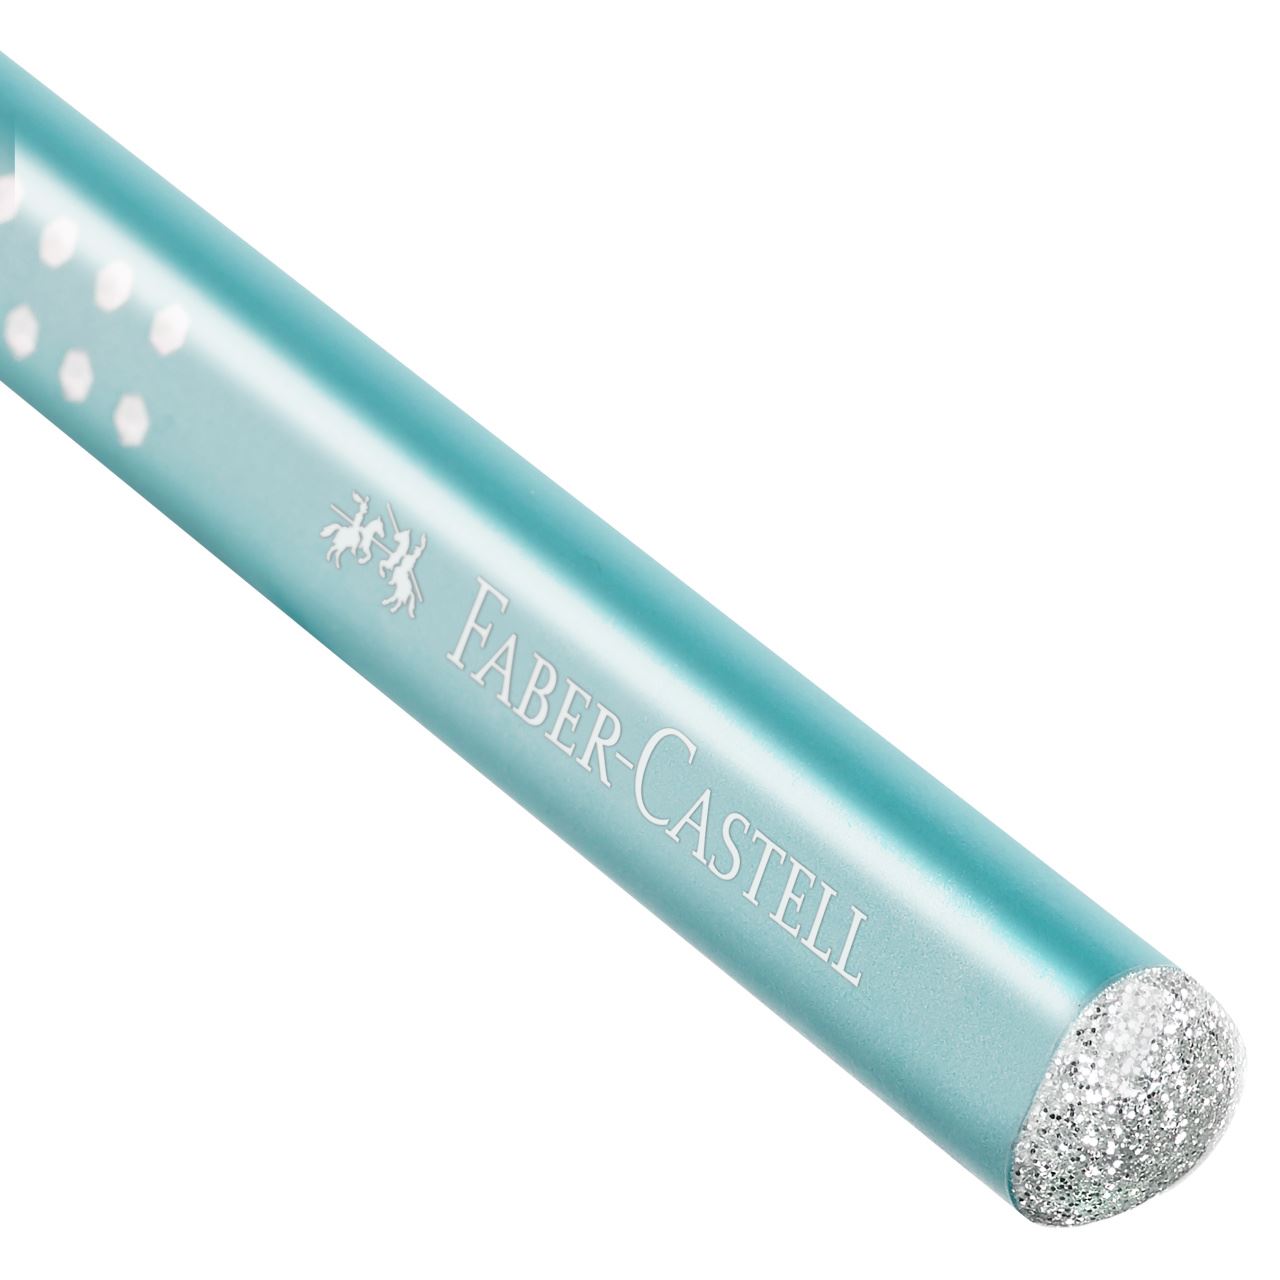 Faber-Castell - Jumbo Sparkle graphite pencil, turquoise